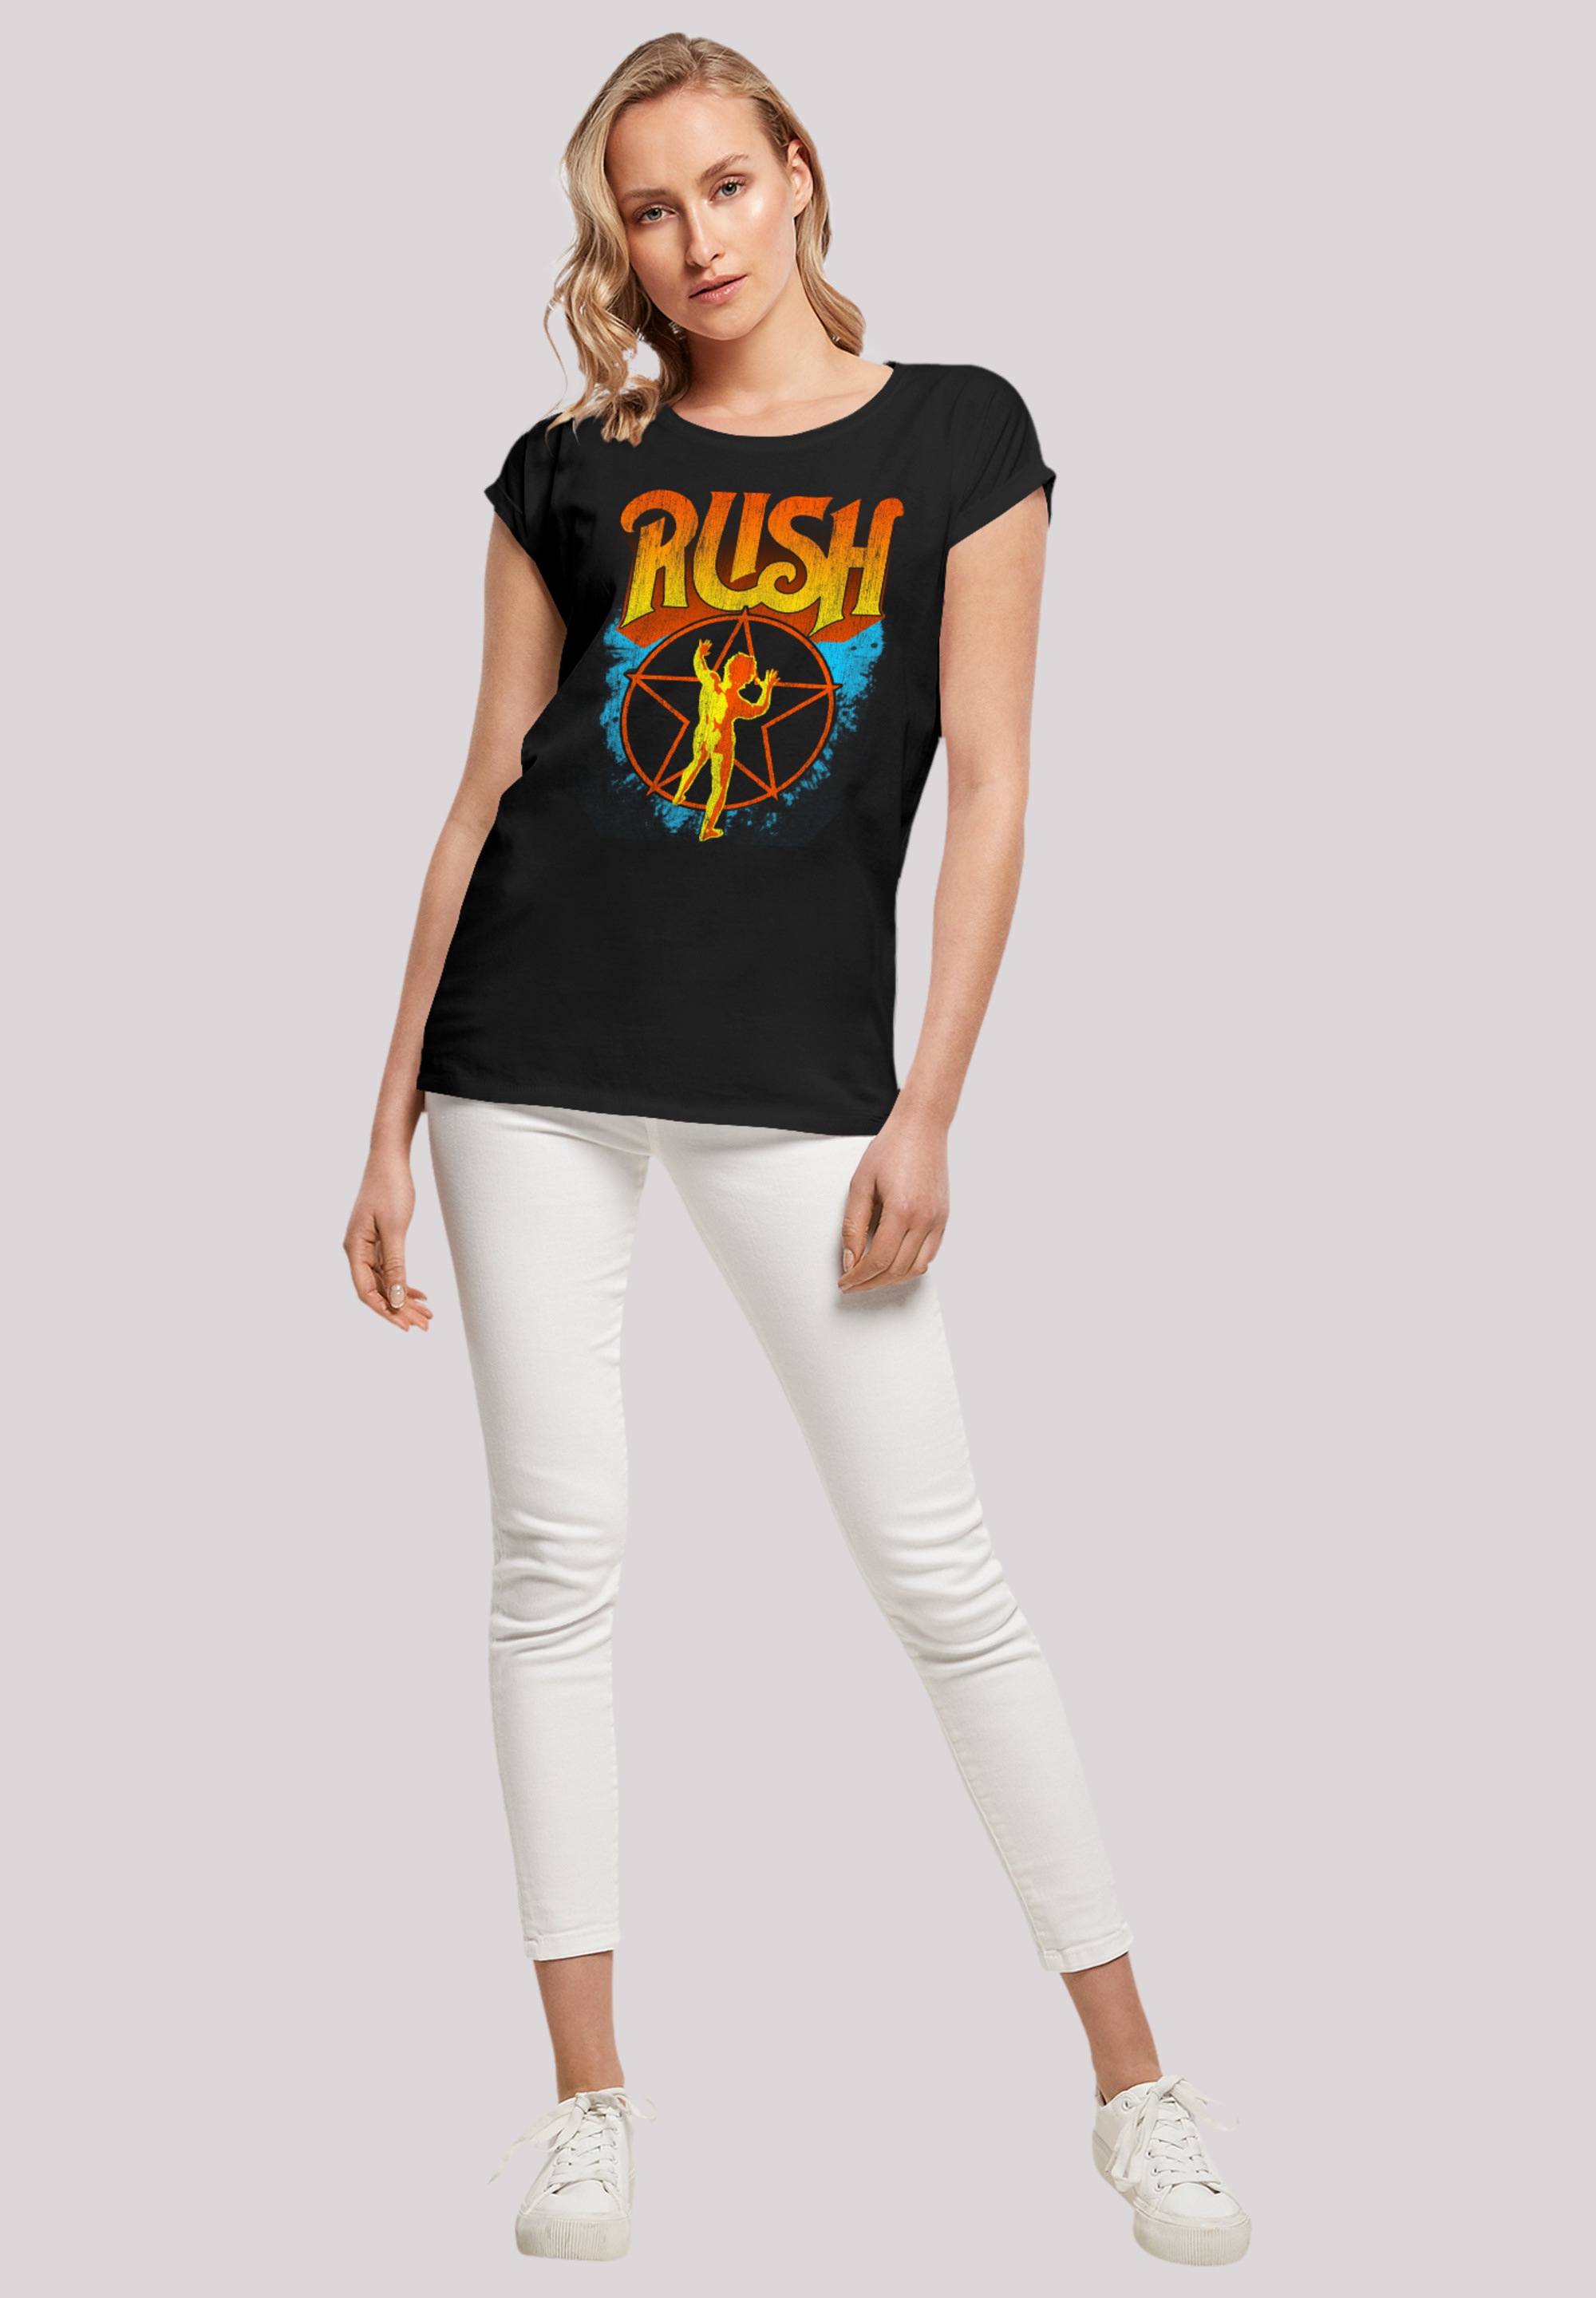 bestellen Qualität online »Rush F4NT4STIC BAUR Premium T-Shirt Rock Starman«, Band |